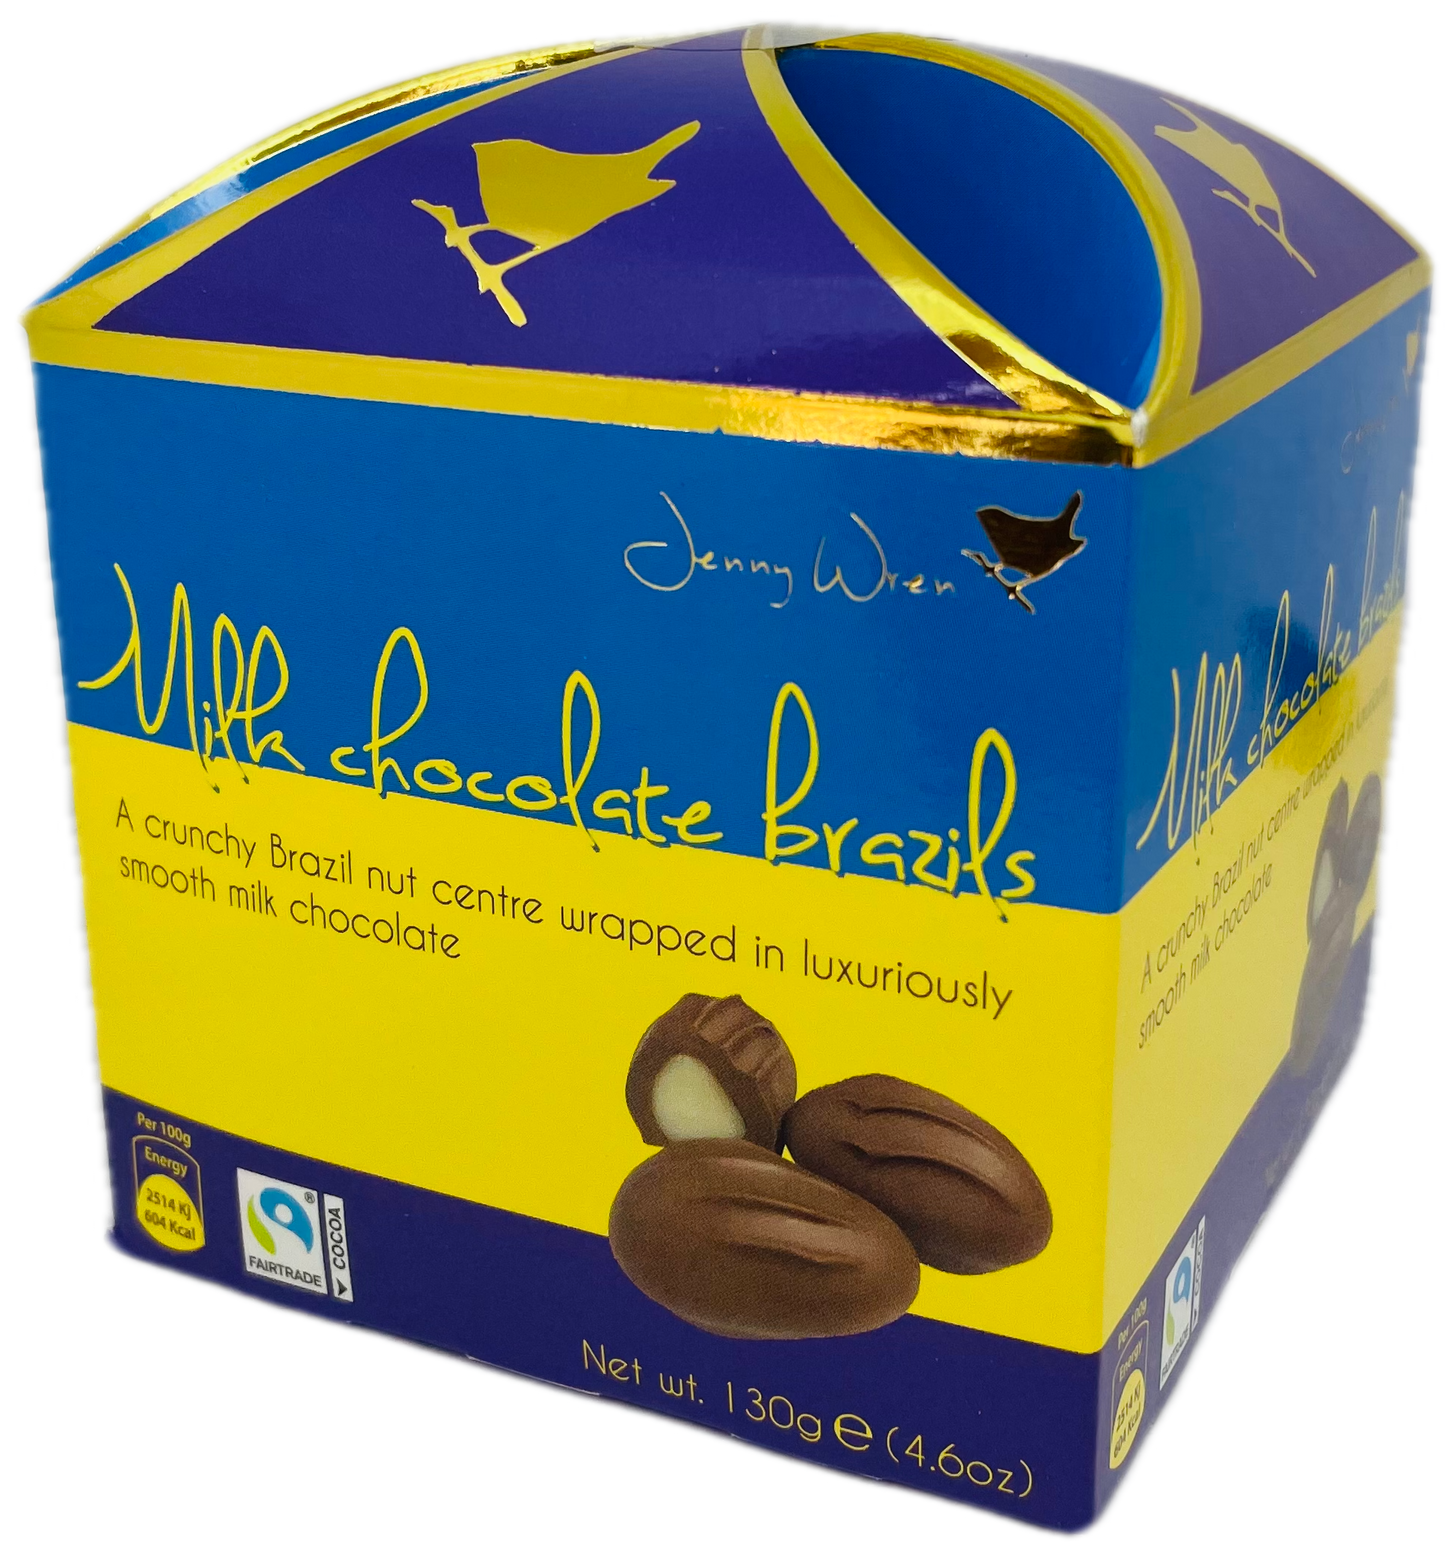 Milk Chocolate Brazil nuts Circus Box 130g